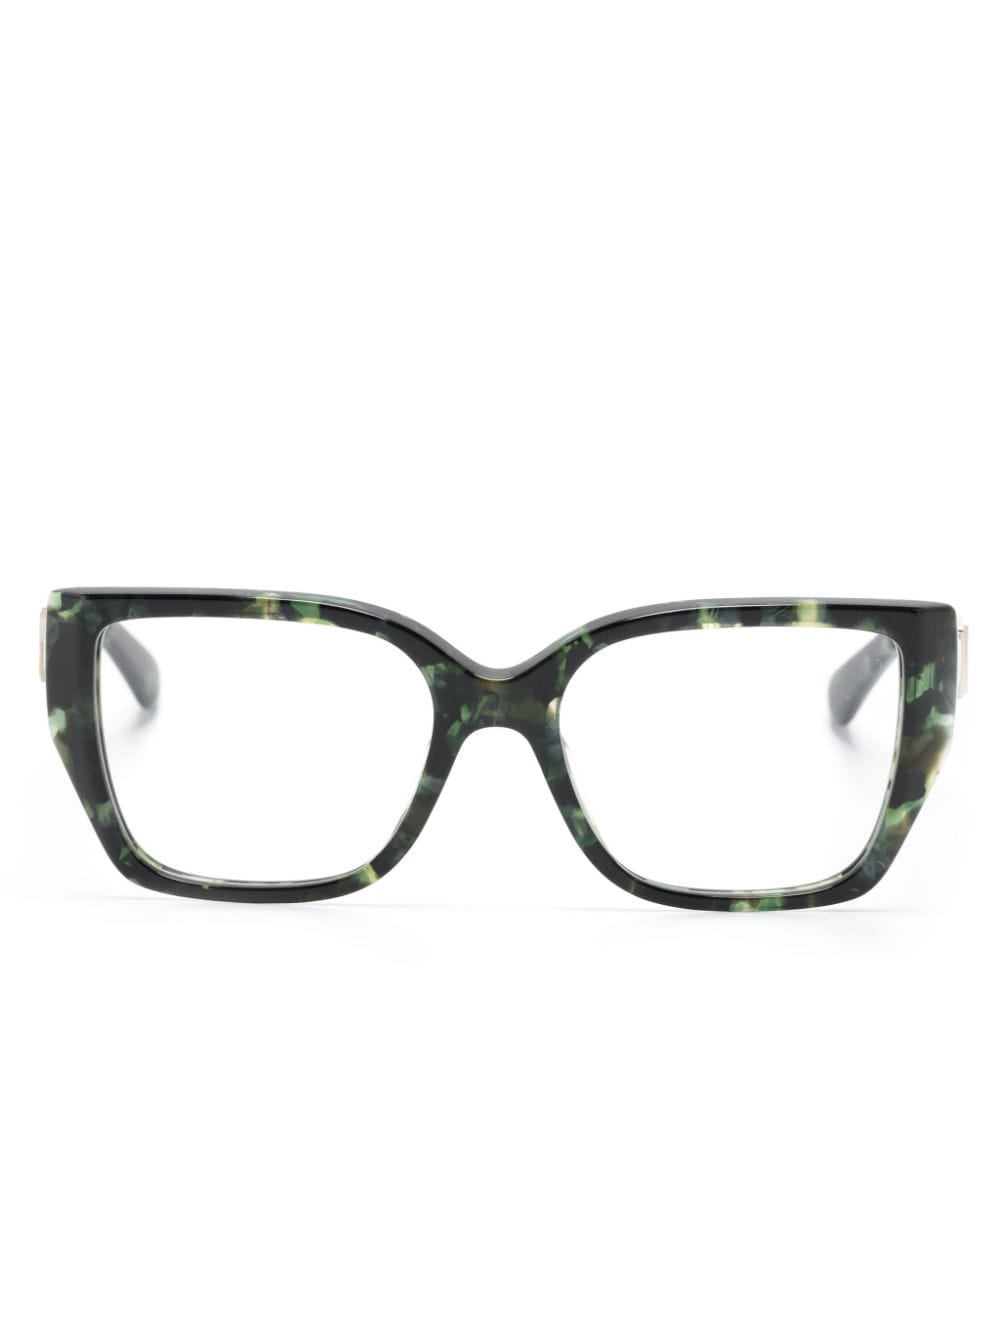 Michael Kors square-frame glasses - Green von Michael Kors